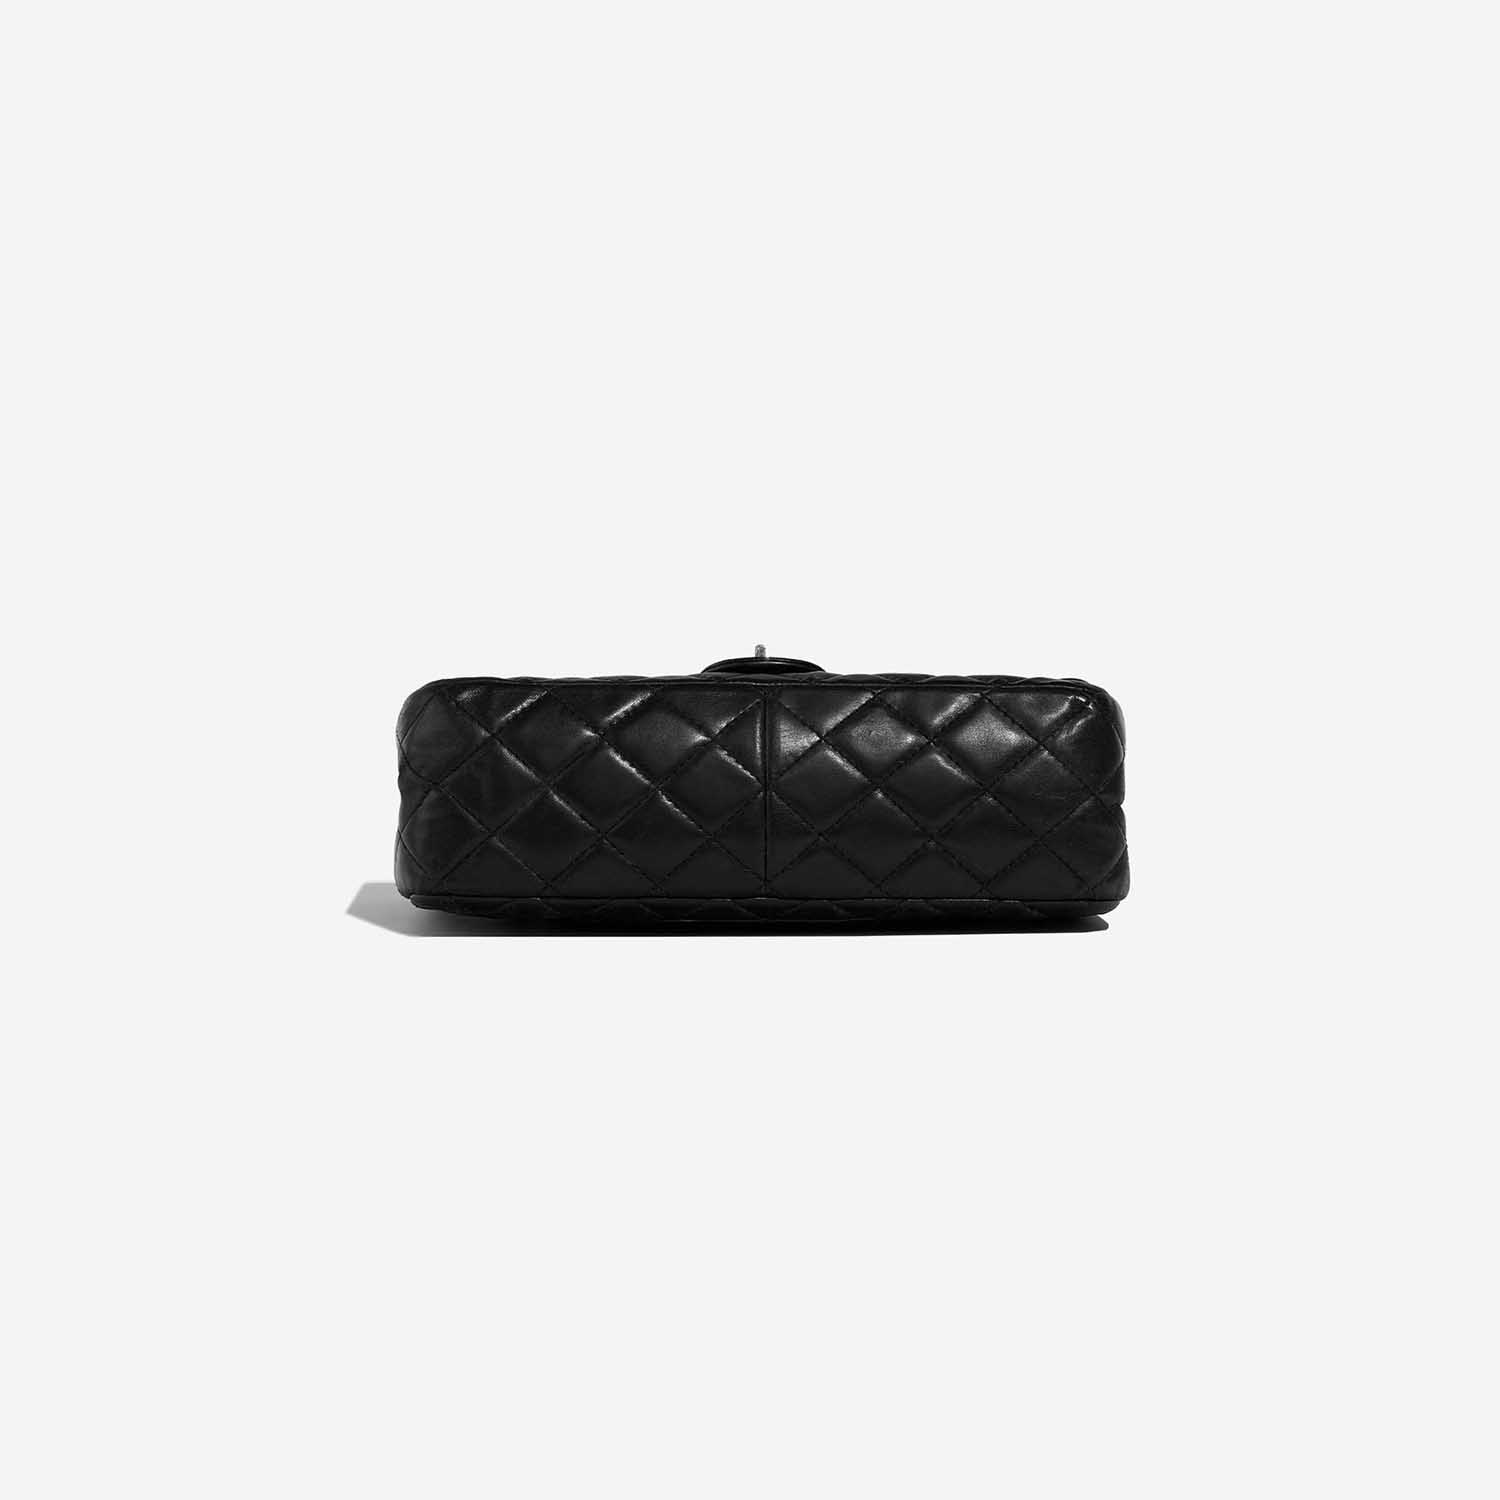 Pre-owned Chanel bag 2.55 Reissue 226 Lamb Black Black Bottom | Sell your designer bag on Saclab.com